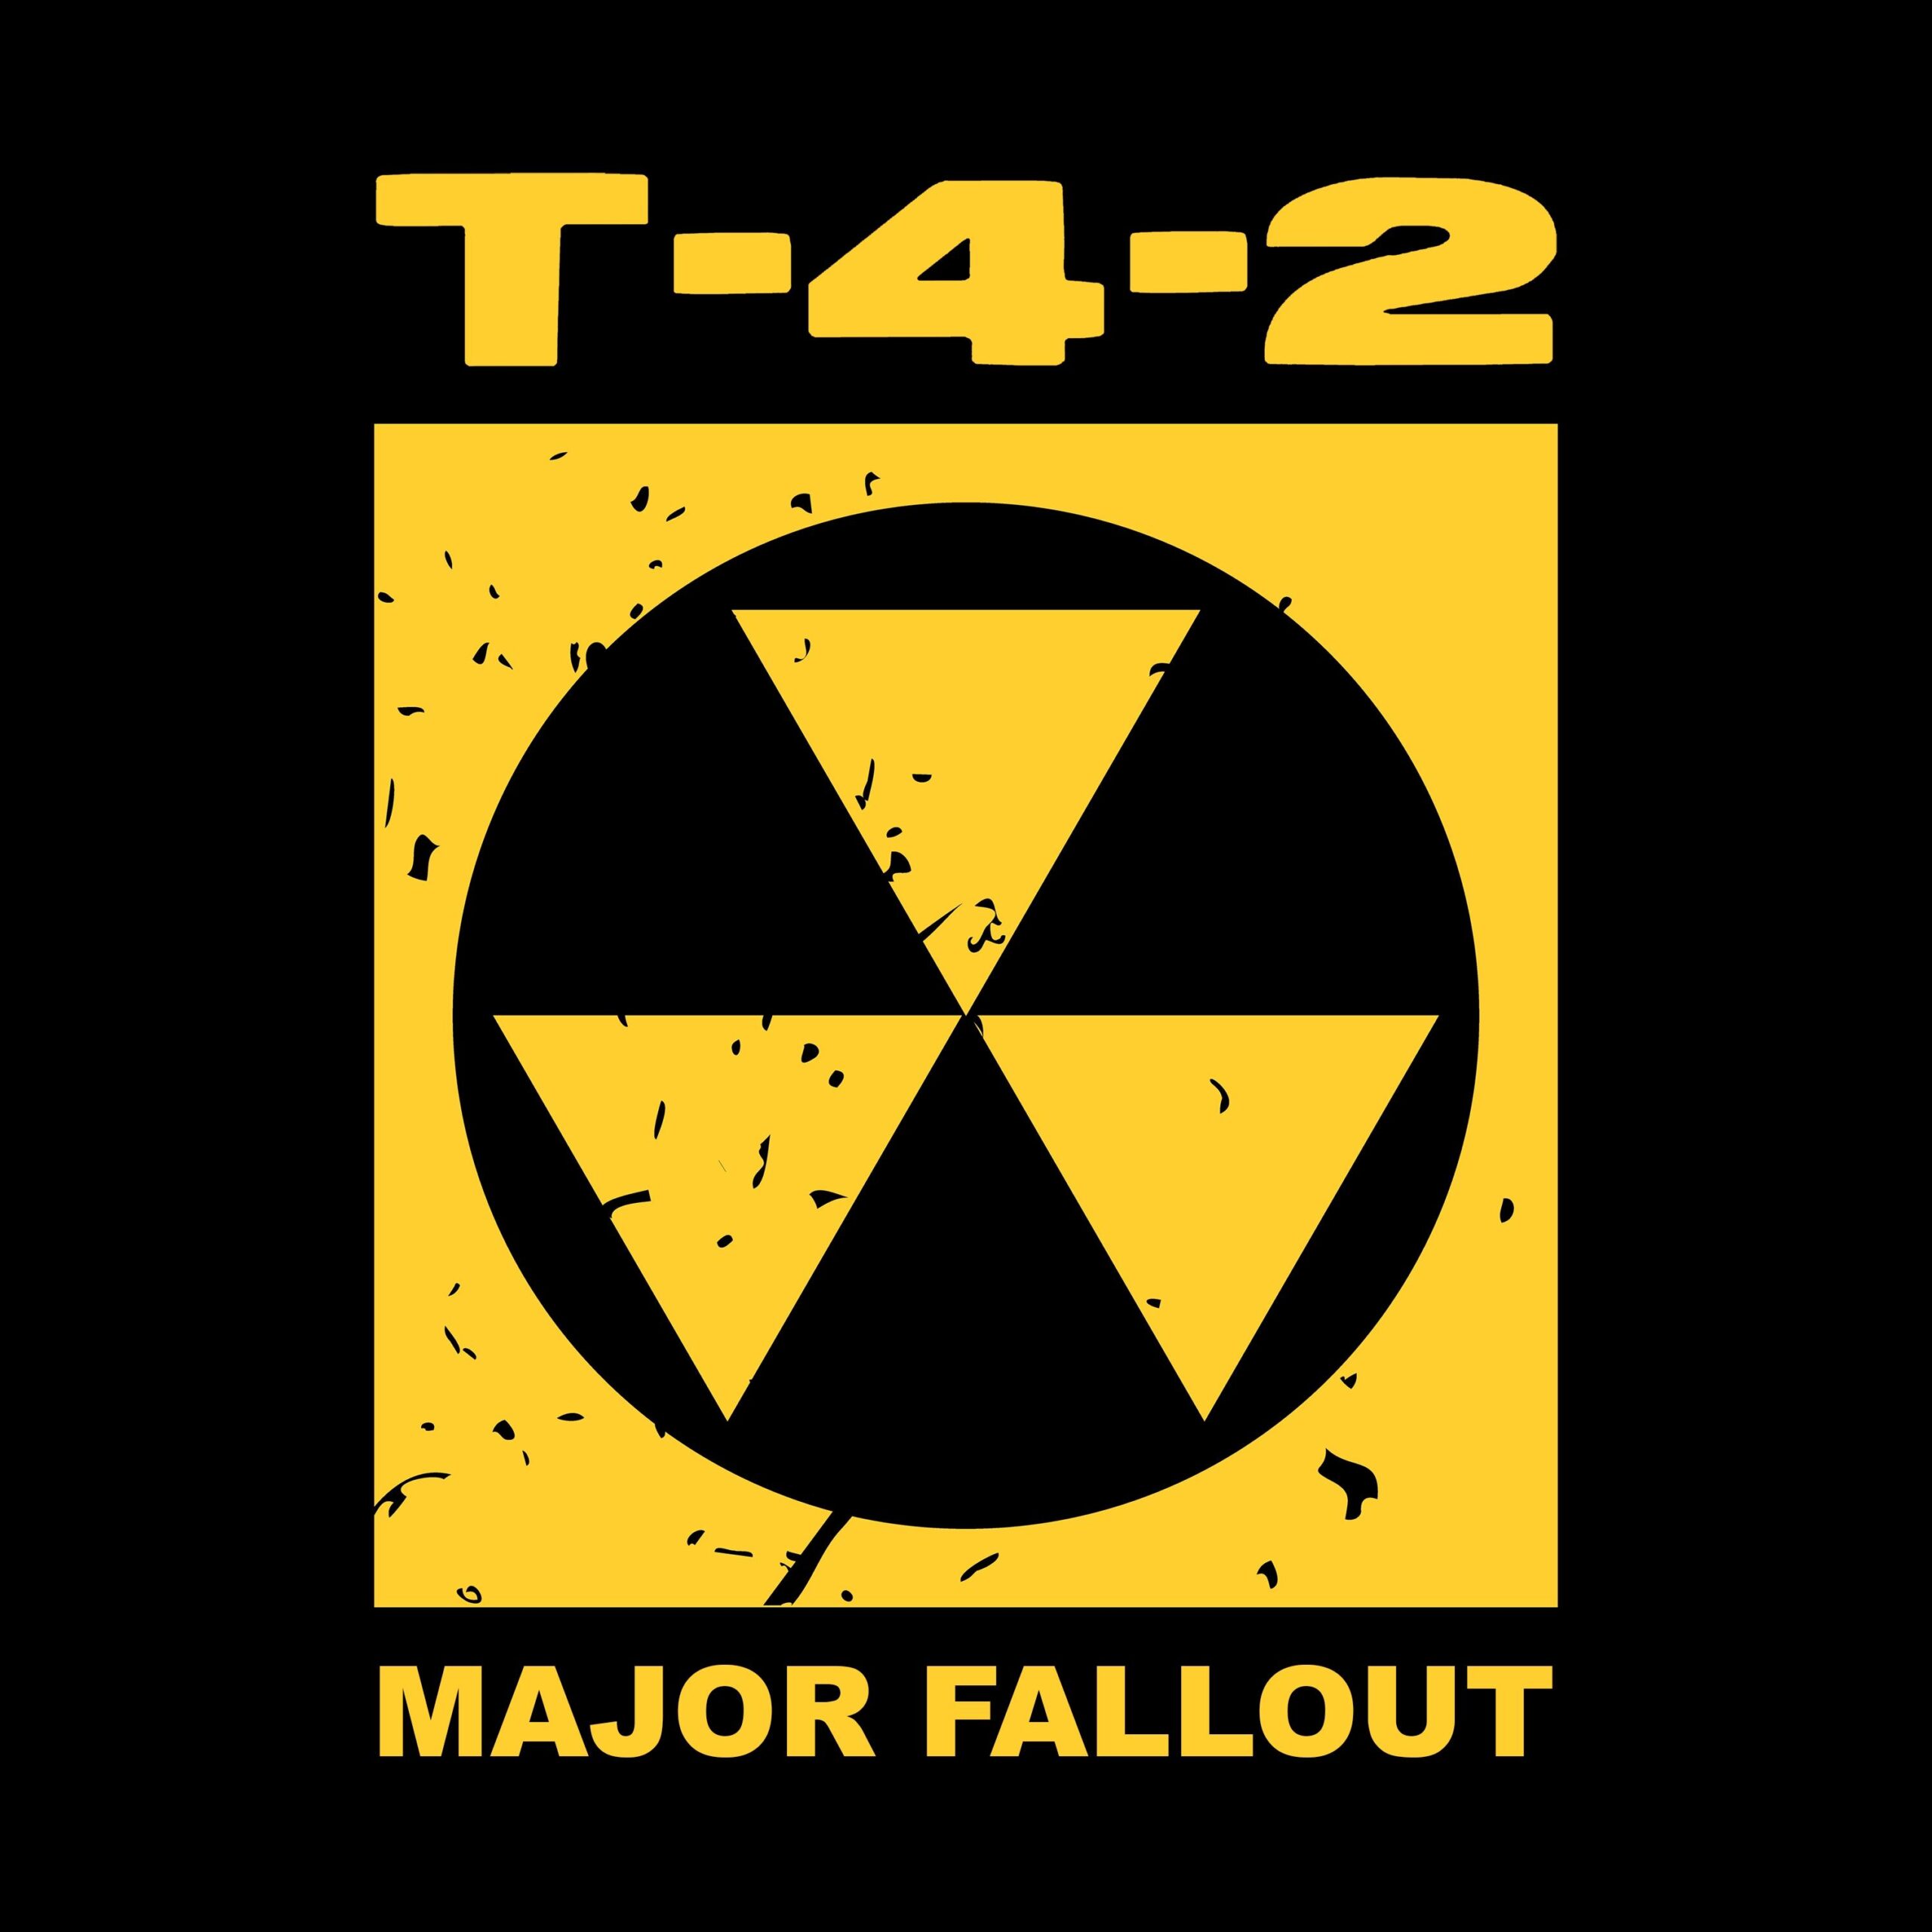 T-4-2 Major Fallout